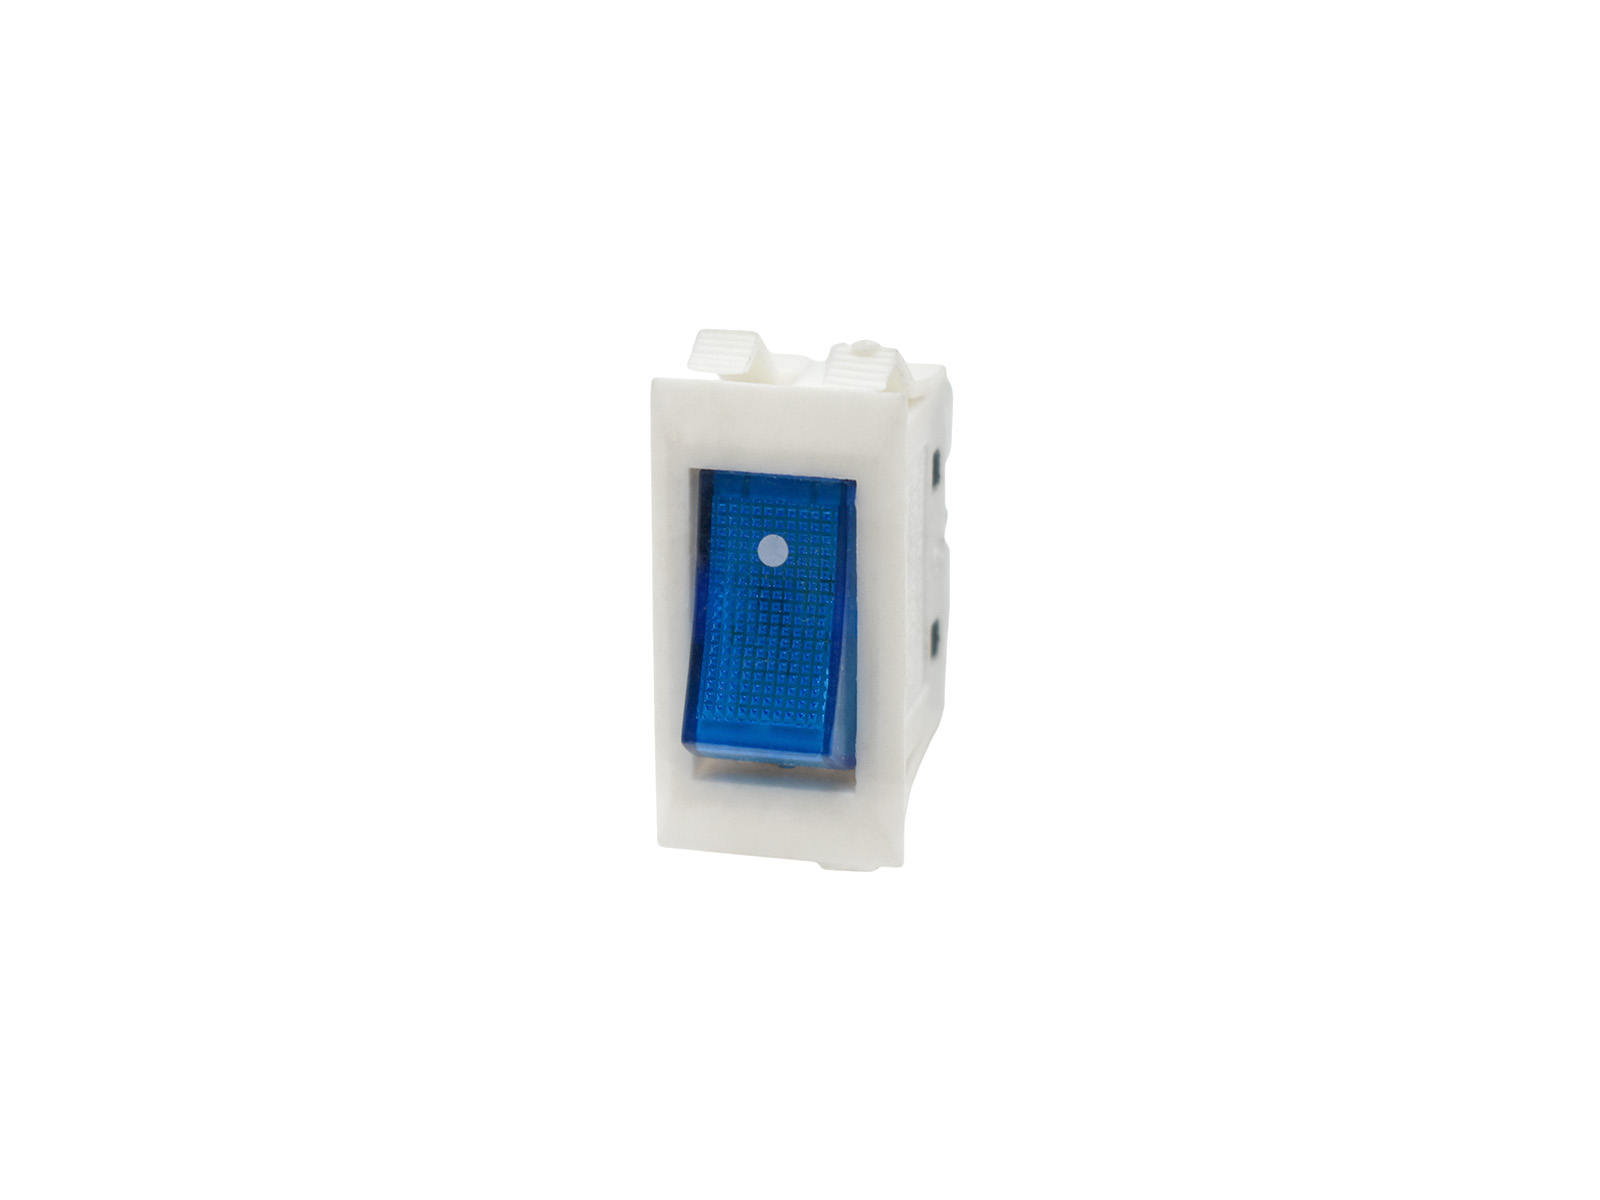 Кнопка EKPARTS YRS-9-21(A) белая, синий колпачок кнопка выключения света ekparts da34 00006c ltk 6 4pin